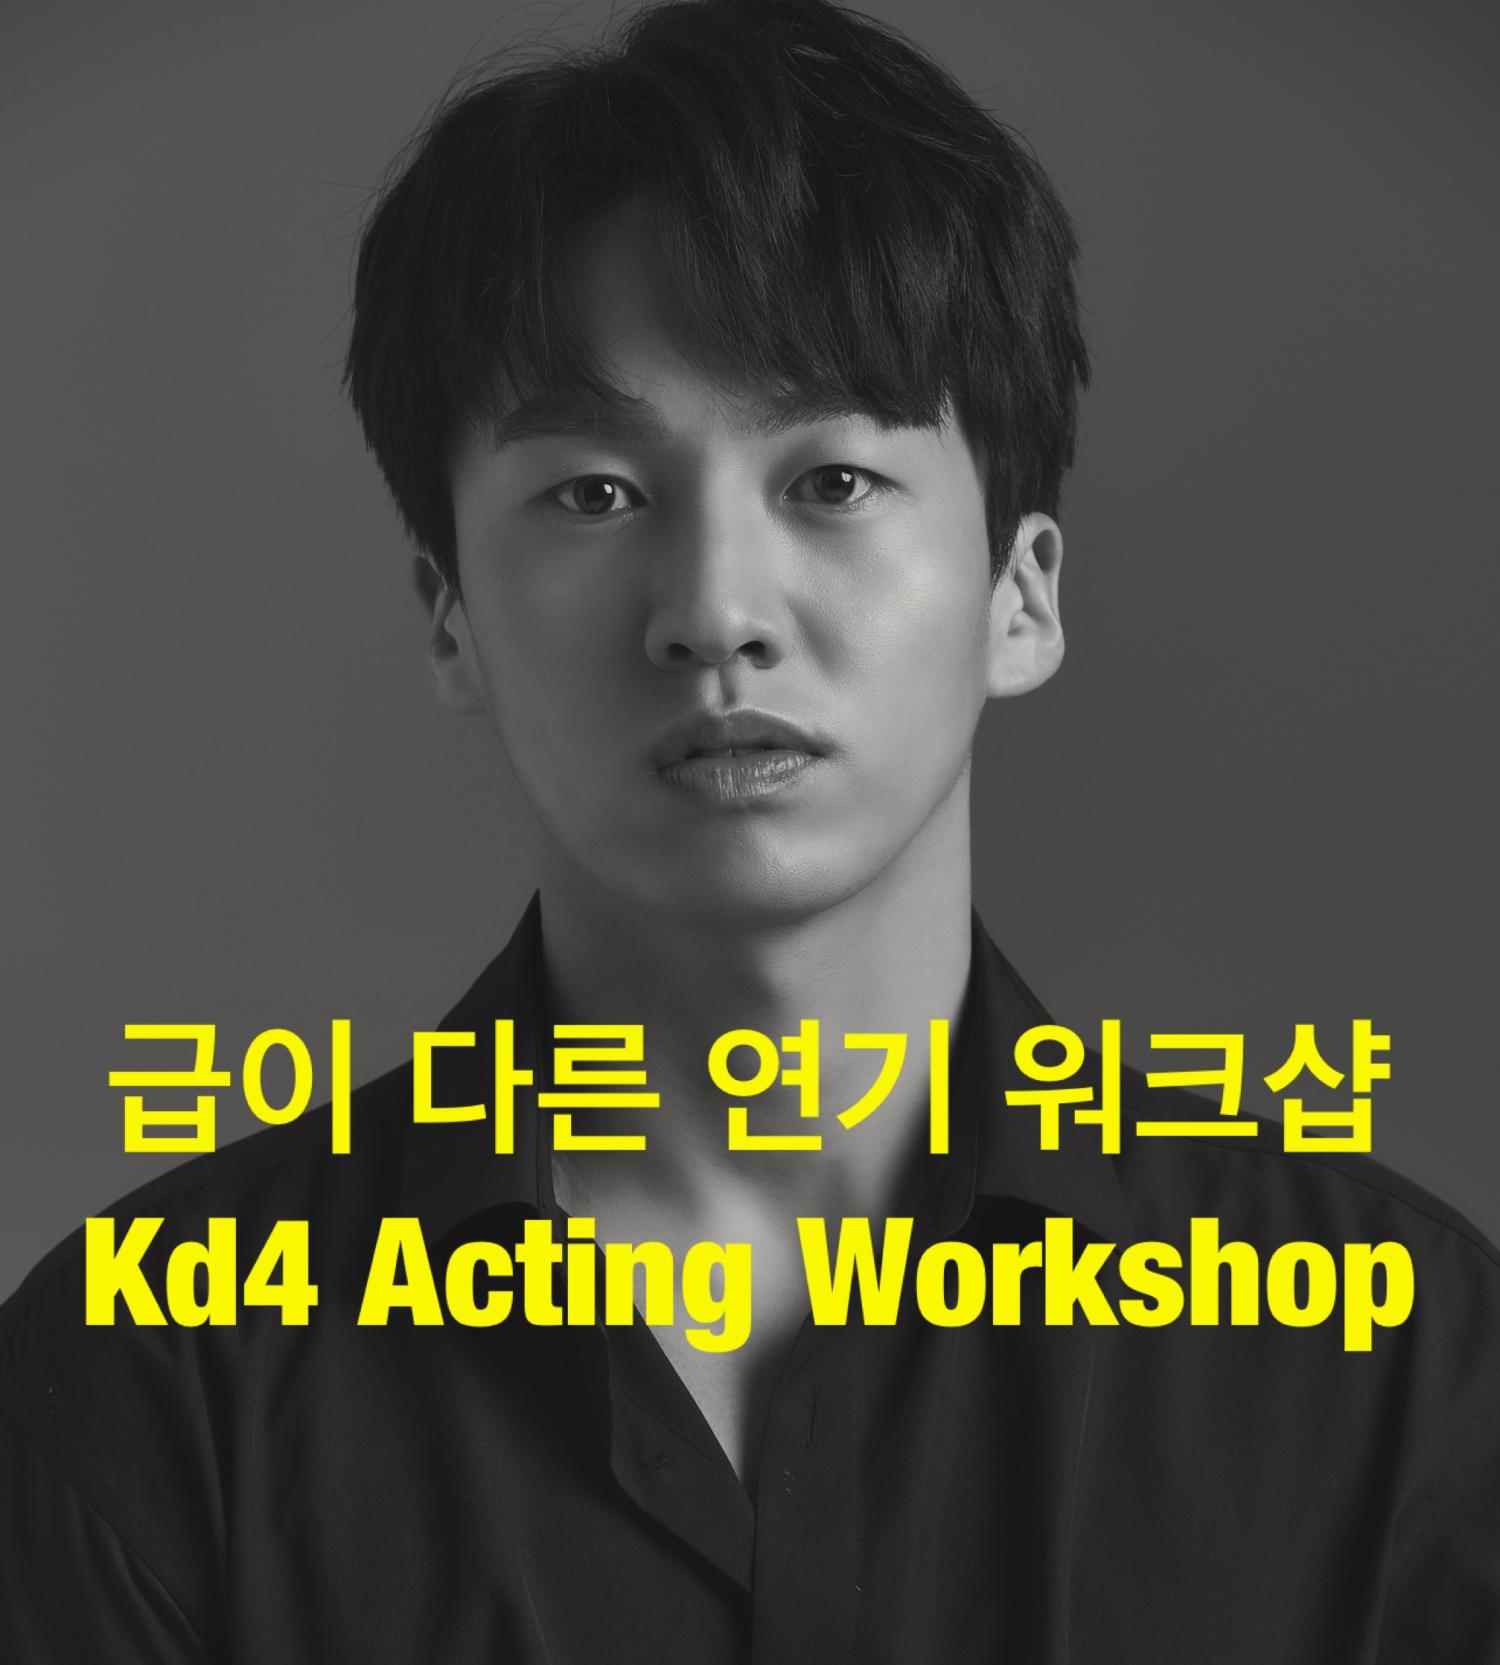 kd4 acting 홍보.JPG